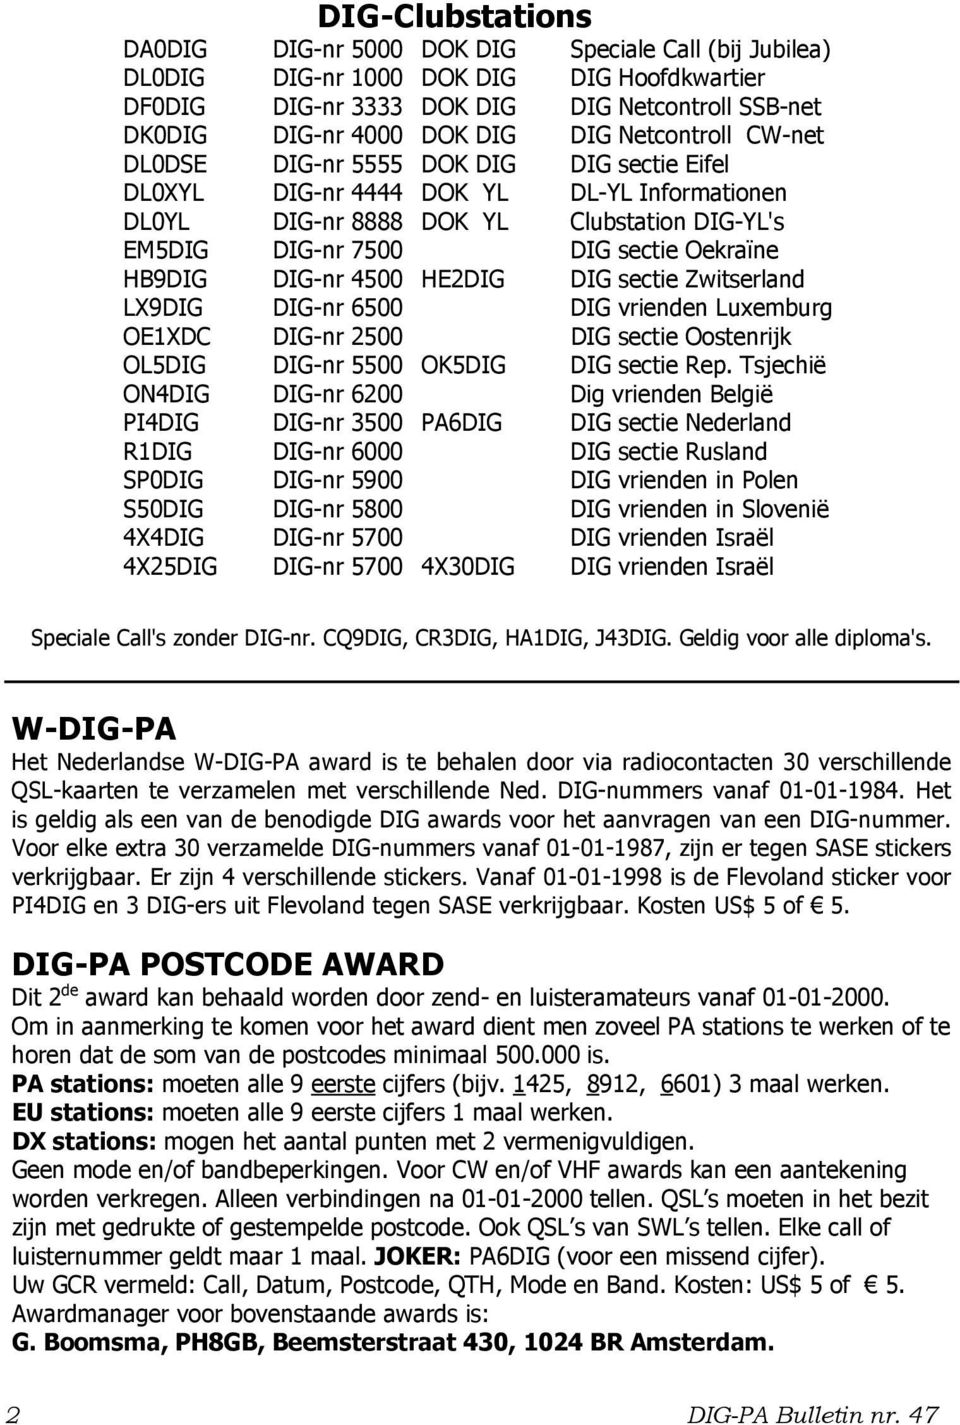 HB9DIG DIG-nr 4500 HE2DIG DIG sectie Zwitserland LX9DIG DIG-nr 6500 DIG vrienden Luxemburg OE1XDC DIG-nr 2500 DIG sectie Oostenrijk OL5DIG DIG-nr 5500 OK5DIG DIG sectie Rep.